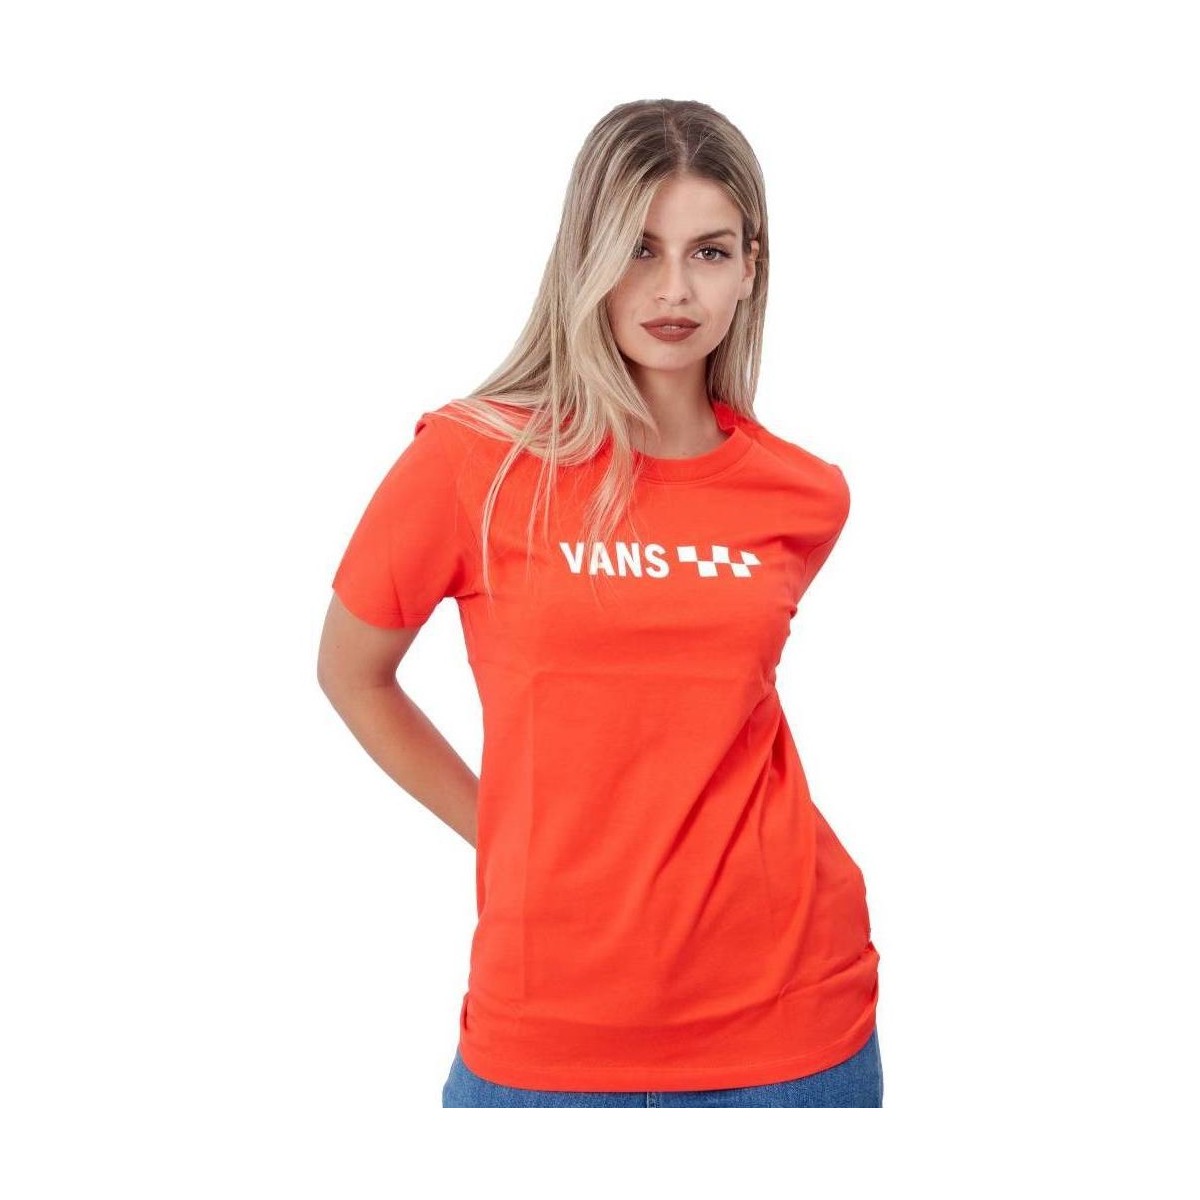 Textil Ženy Košile / Halenky Vans BRAND STRIPER BF Oranžová